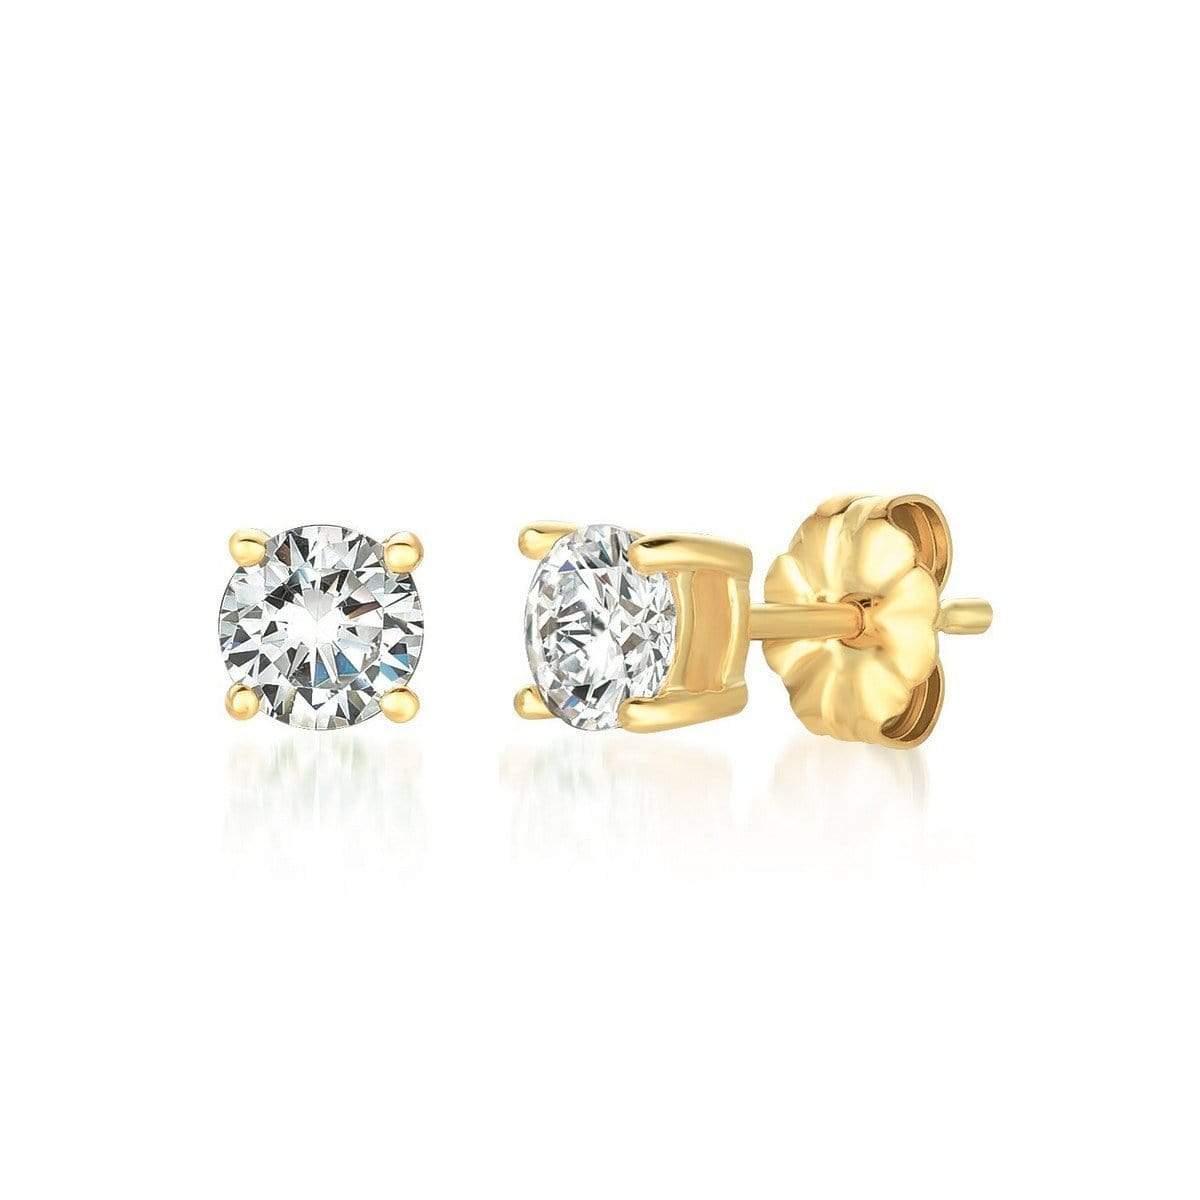 Crislu Jewelry CRISLU Solitaire Brilliant Earrings 1.00 Carat Finished in 18kt Gold